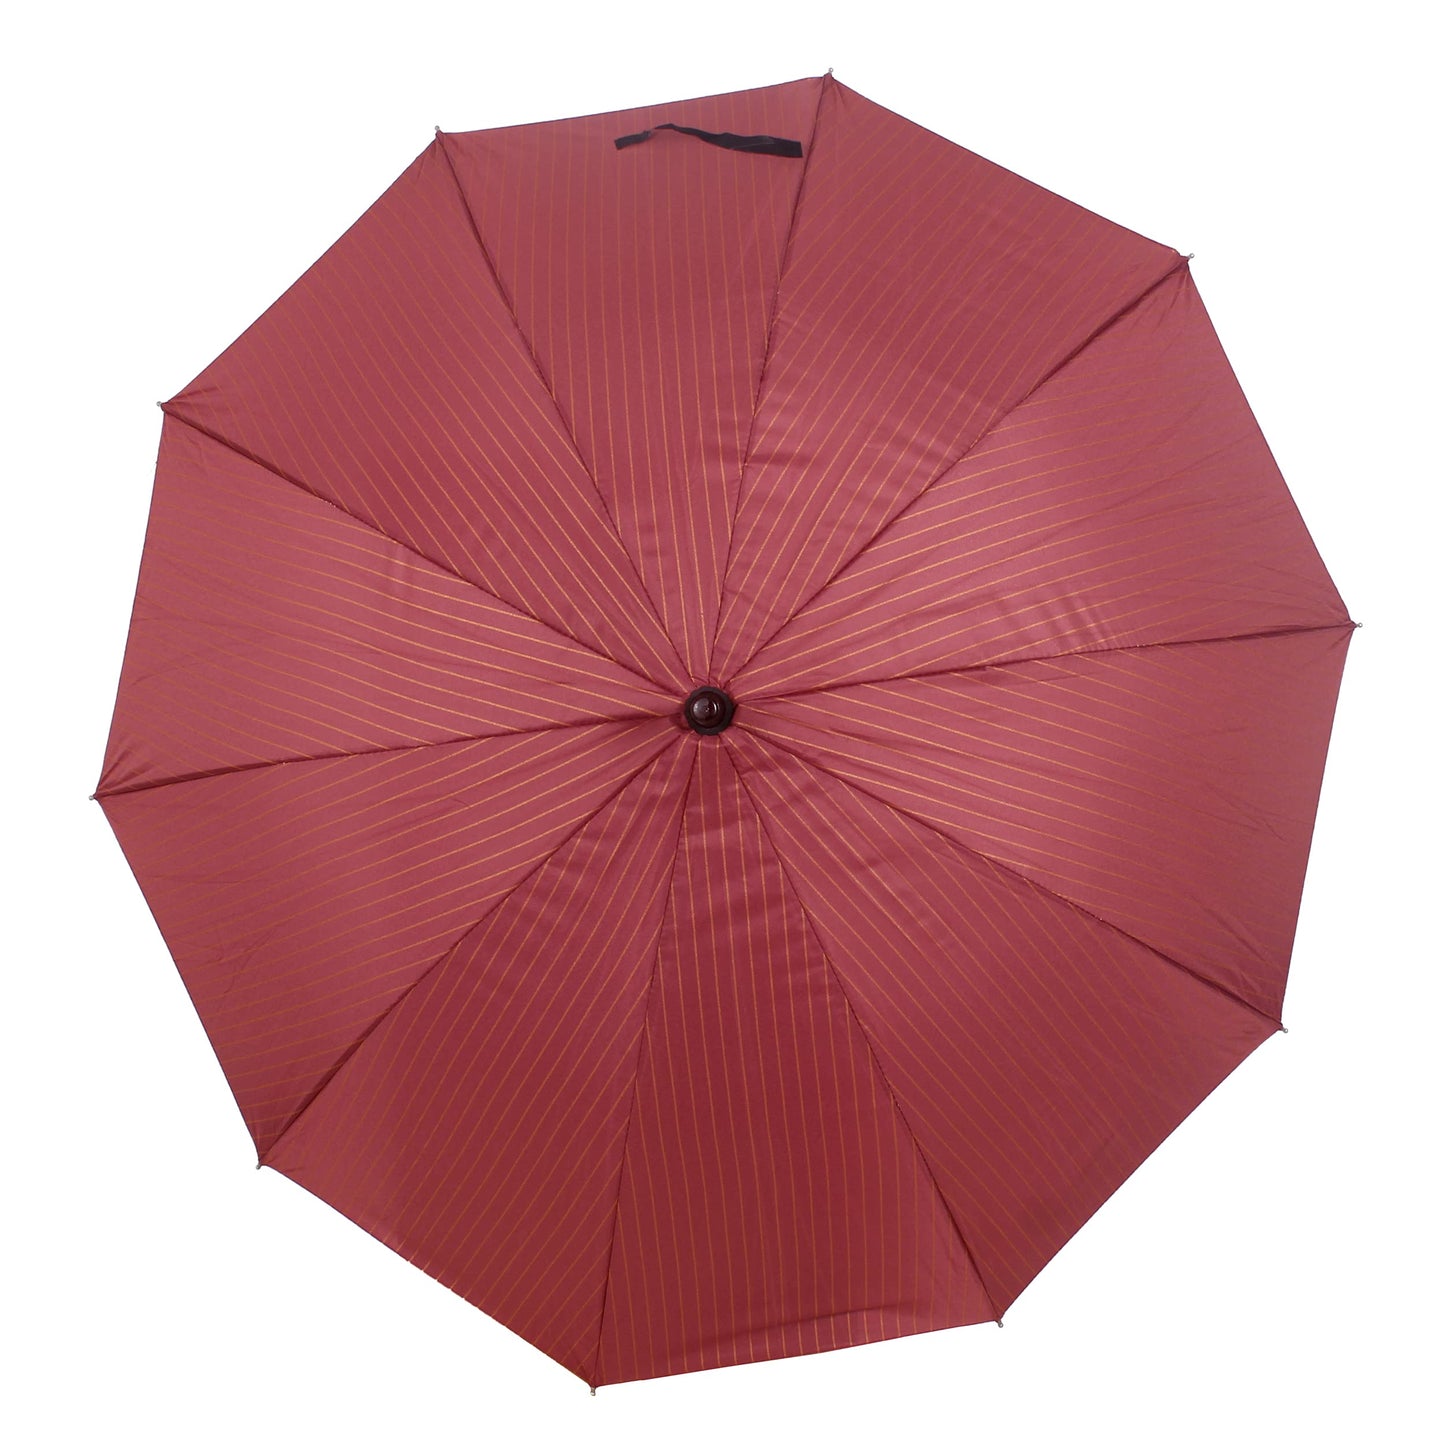 THE CLOWNFISH Umbrella Single Fold Auto Open Waterproof Pongee Umbrellas For Men and Women (Crimson Red)